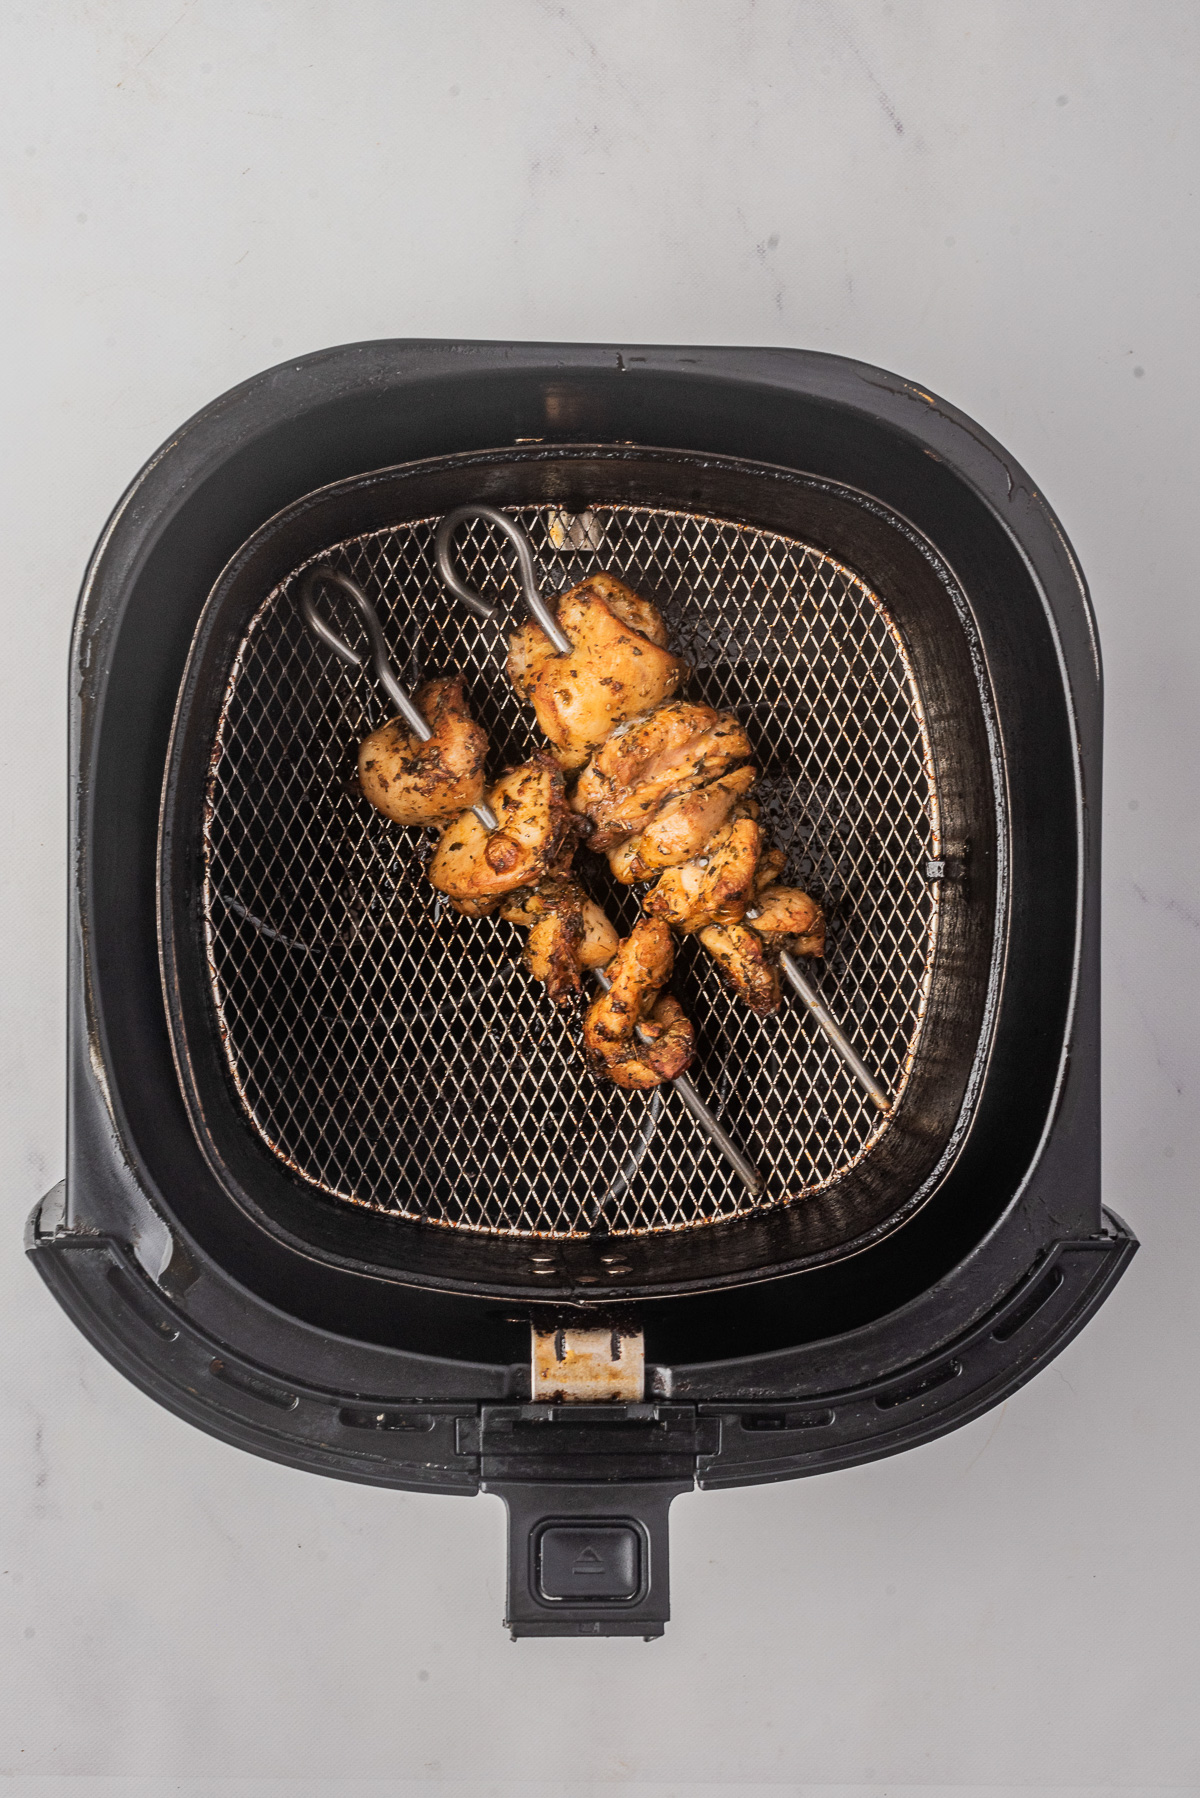 Cooked Air Fryer Greek Chicken in the air fryer basket